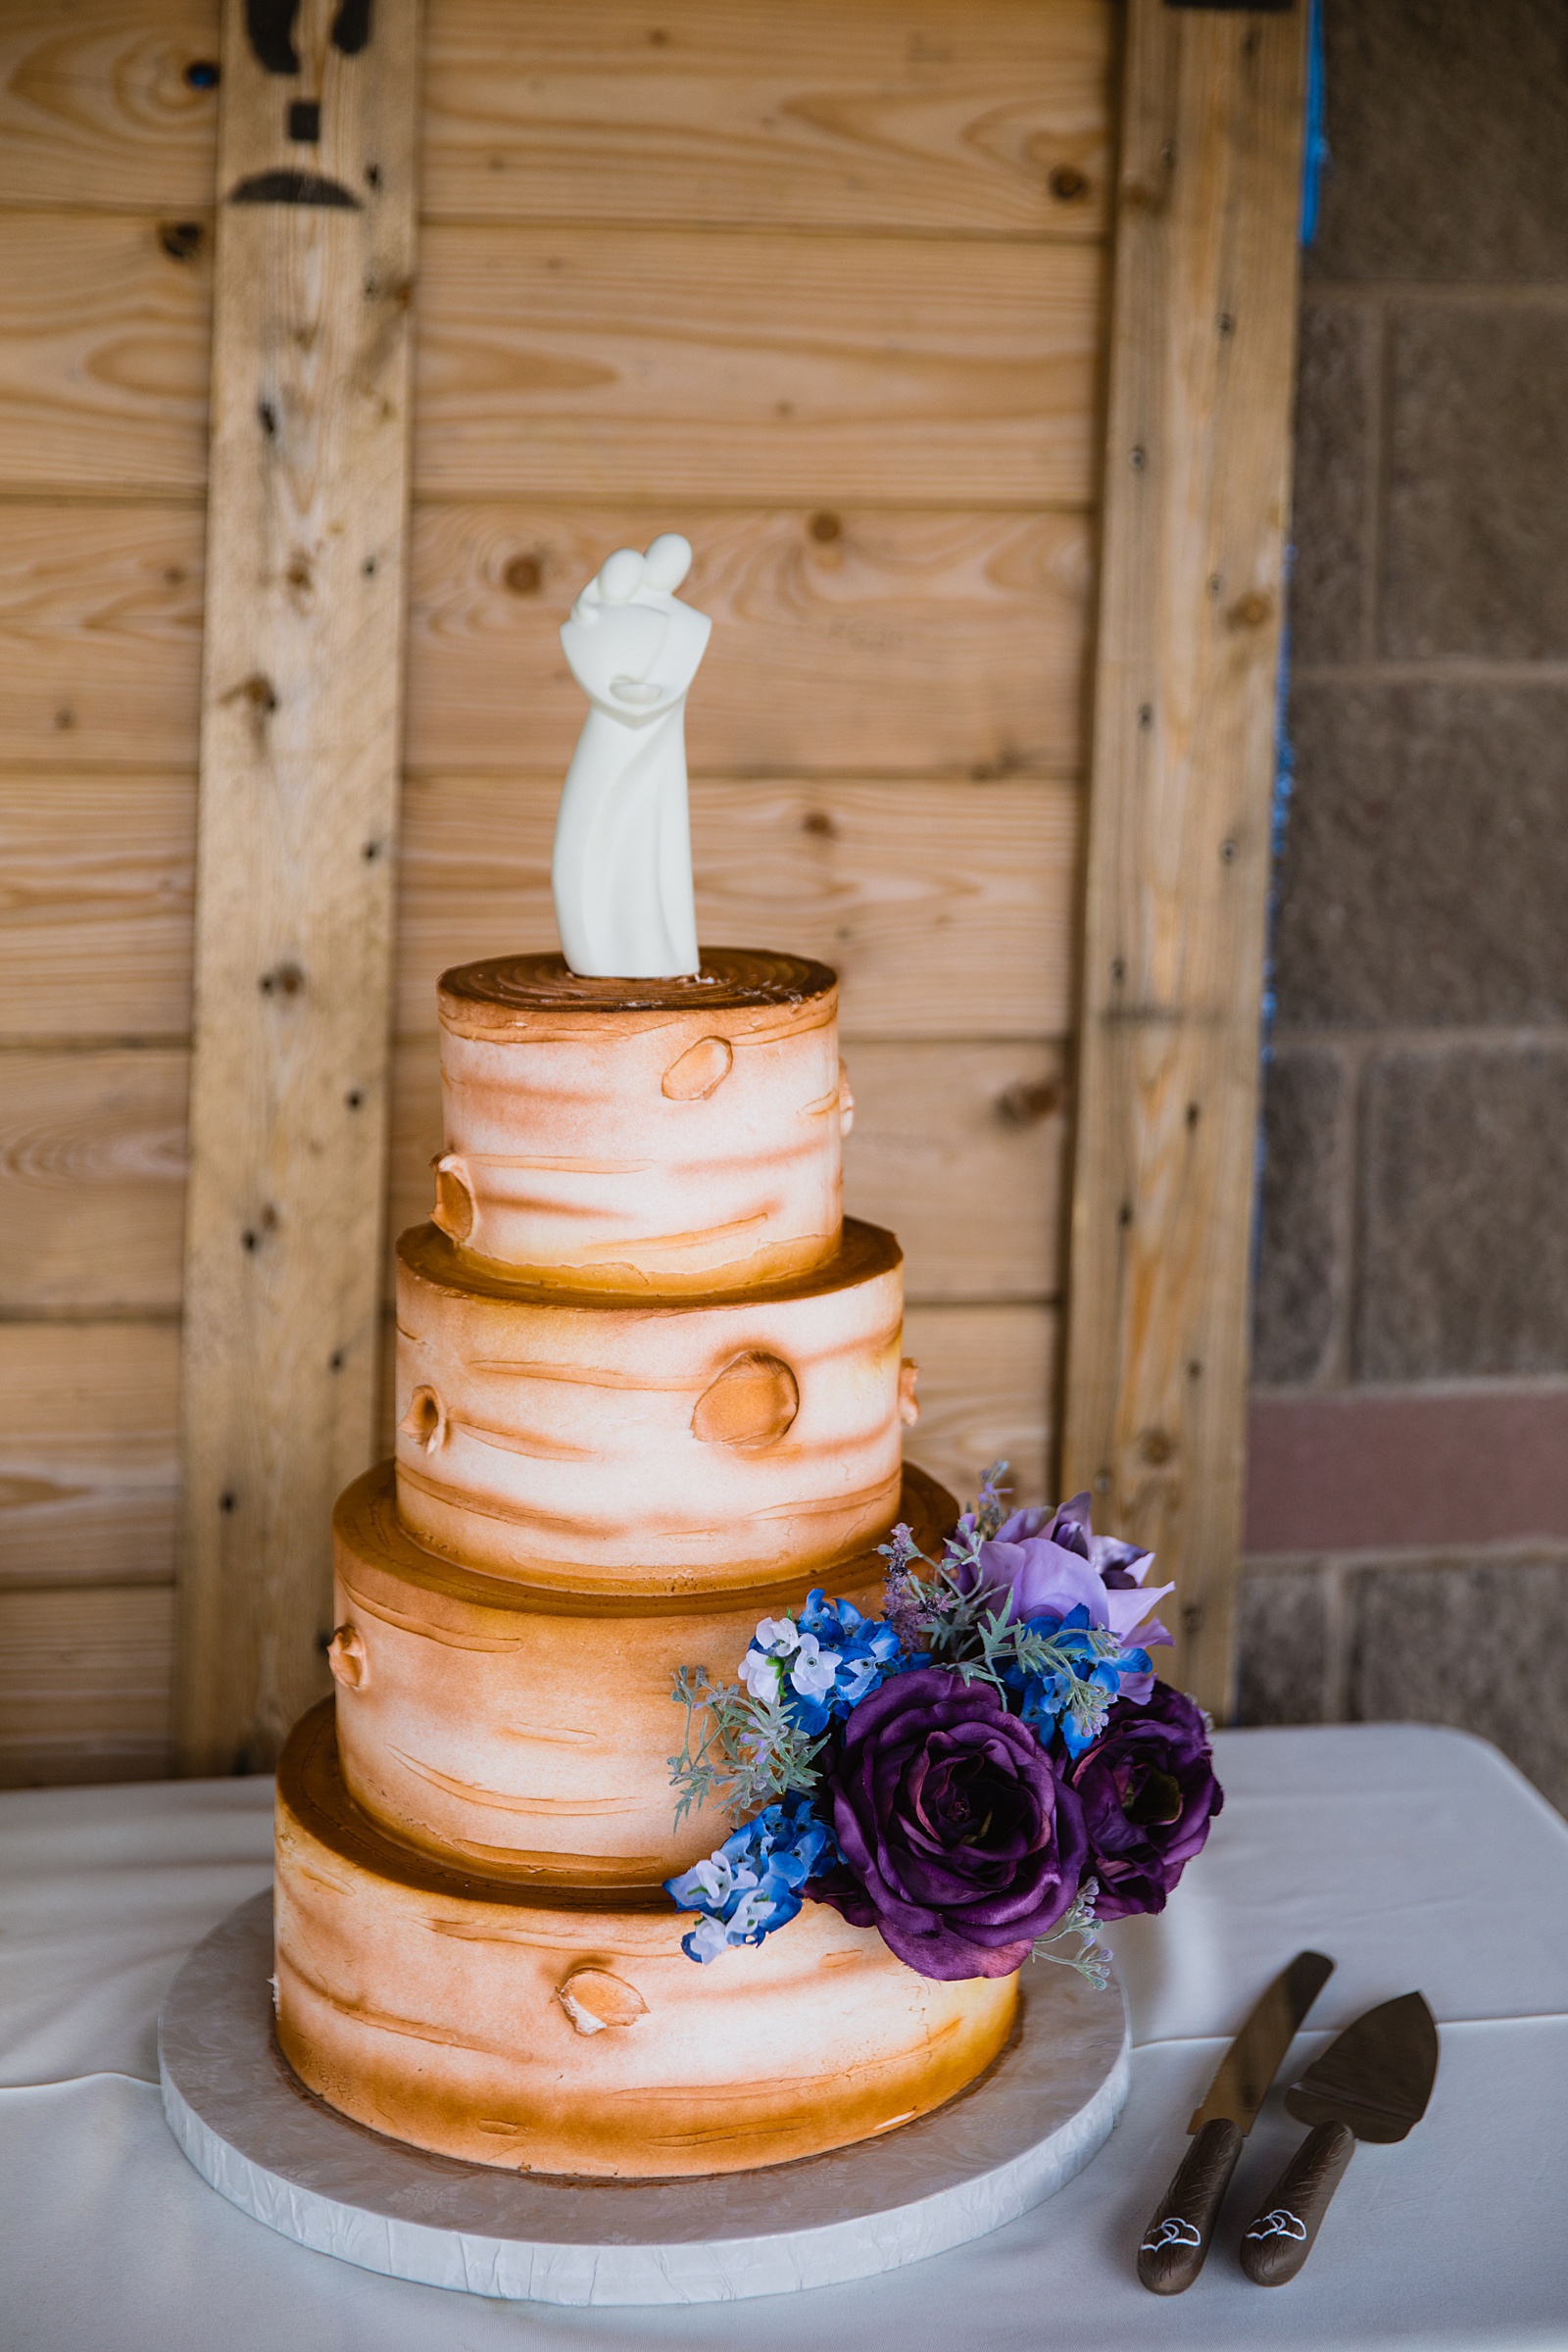 Rustic wood wedding cake at a 101 Polo Club reception by Arizona wedding photographer PMA Photography.